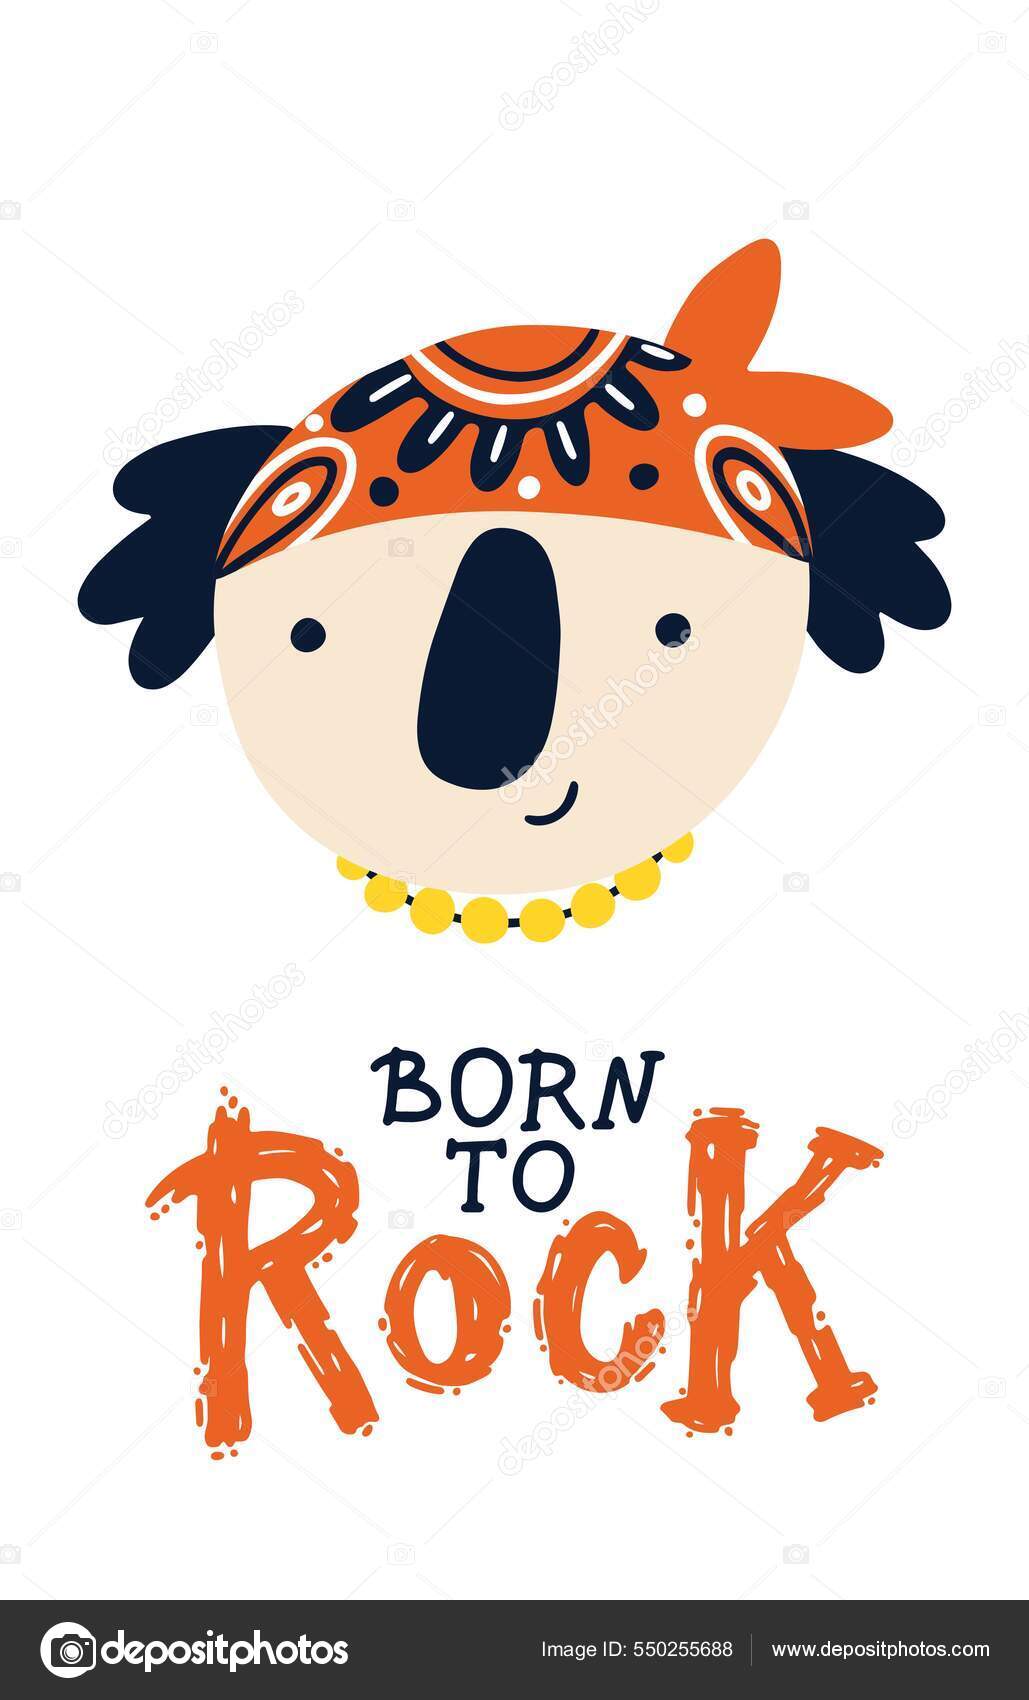 Rock Koala postcard - born to rock. Vector cartoon character in